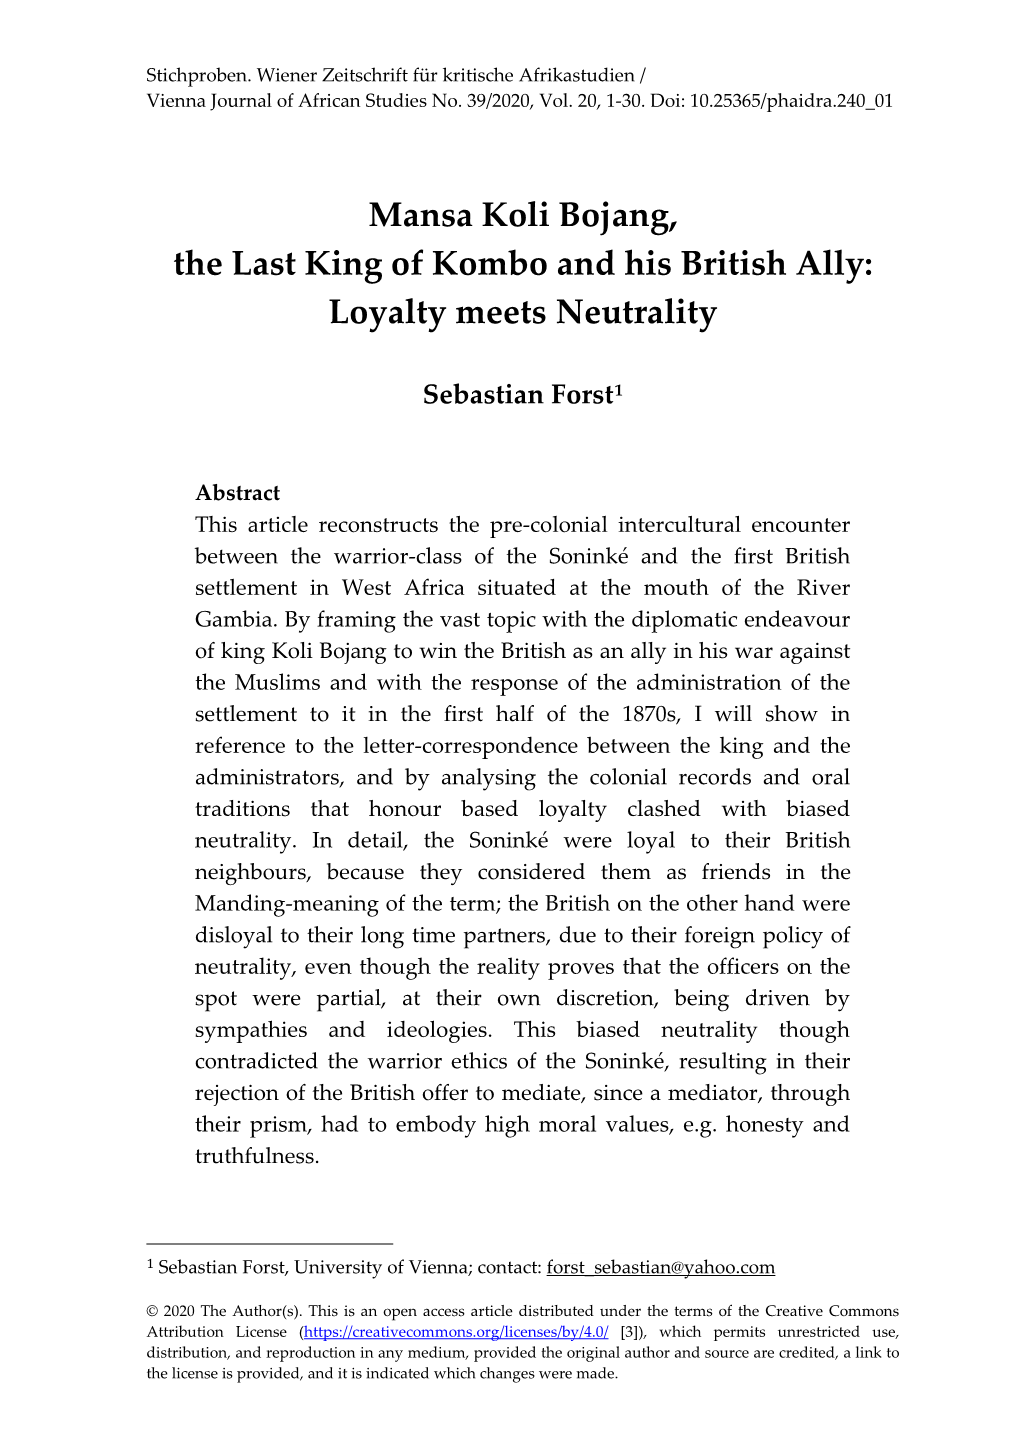 Mansa Koli Bojang, the Last King of Kombo and His British Ally: Loyalty Meets Neutrality